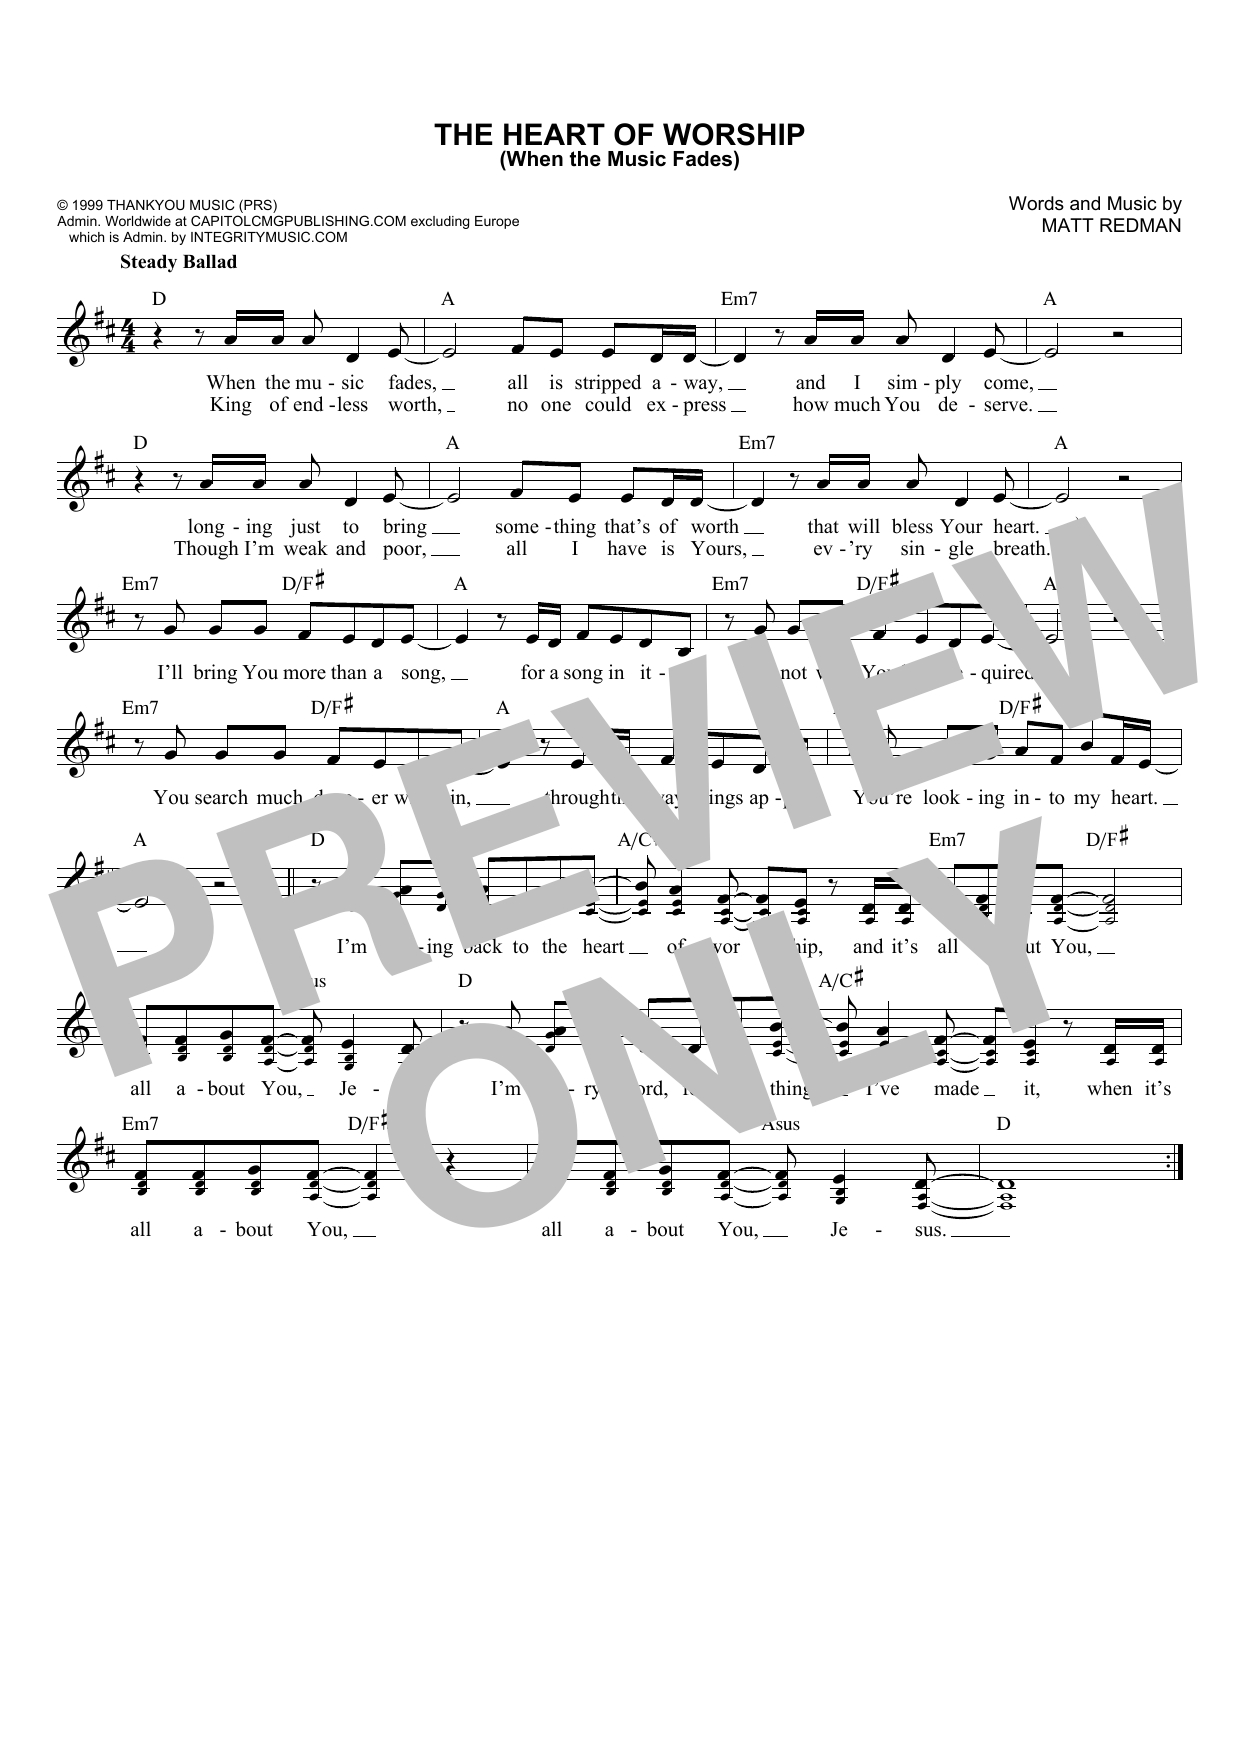 Heart Of Worship Chords Matt Redman The Heart Of Worship When The Music Fades Sheet Music Notes Chords Download Printable Lead Sheet Fake Book Sku 179301